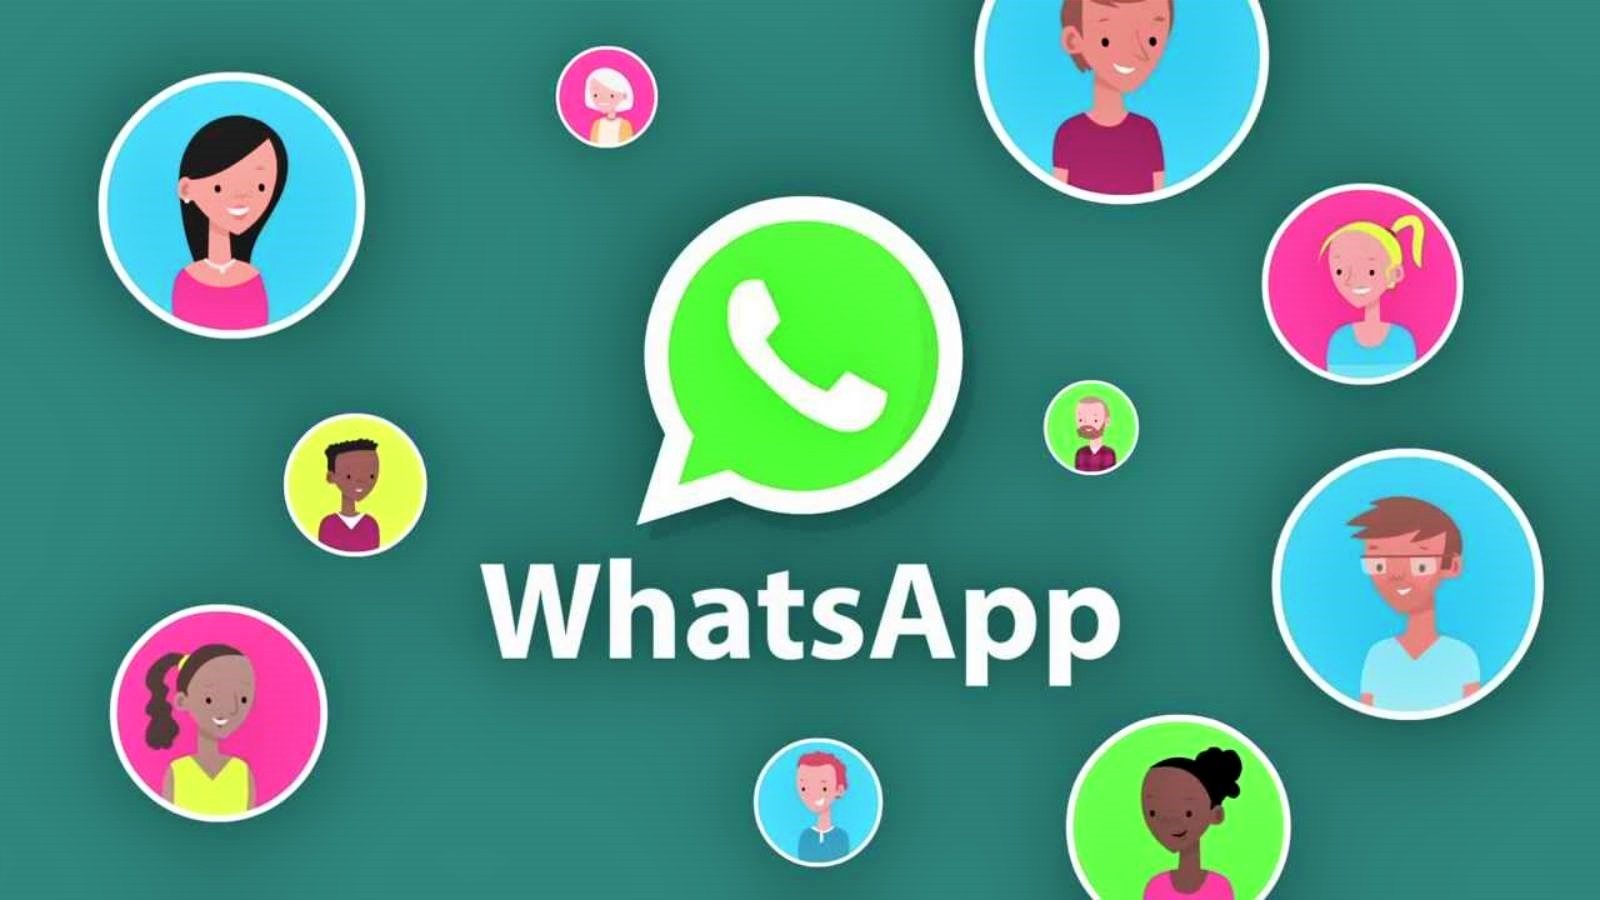 Criticile DURE WhatsApp Publicate CEO Companiei